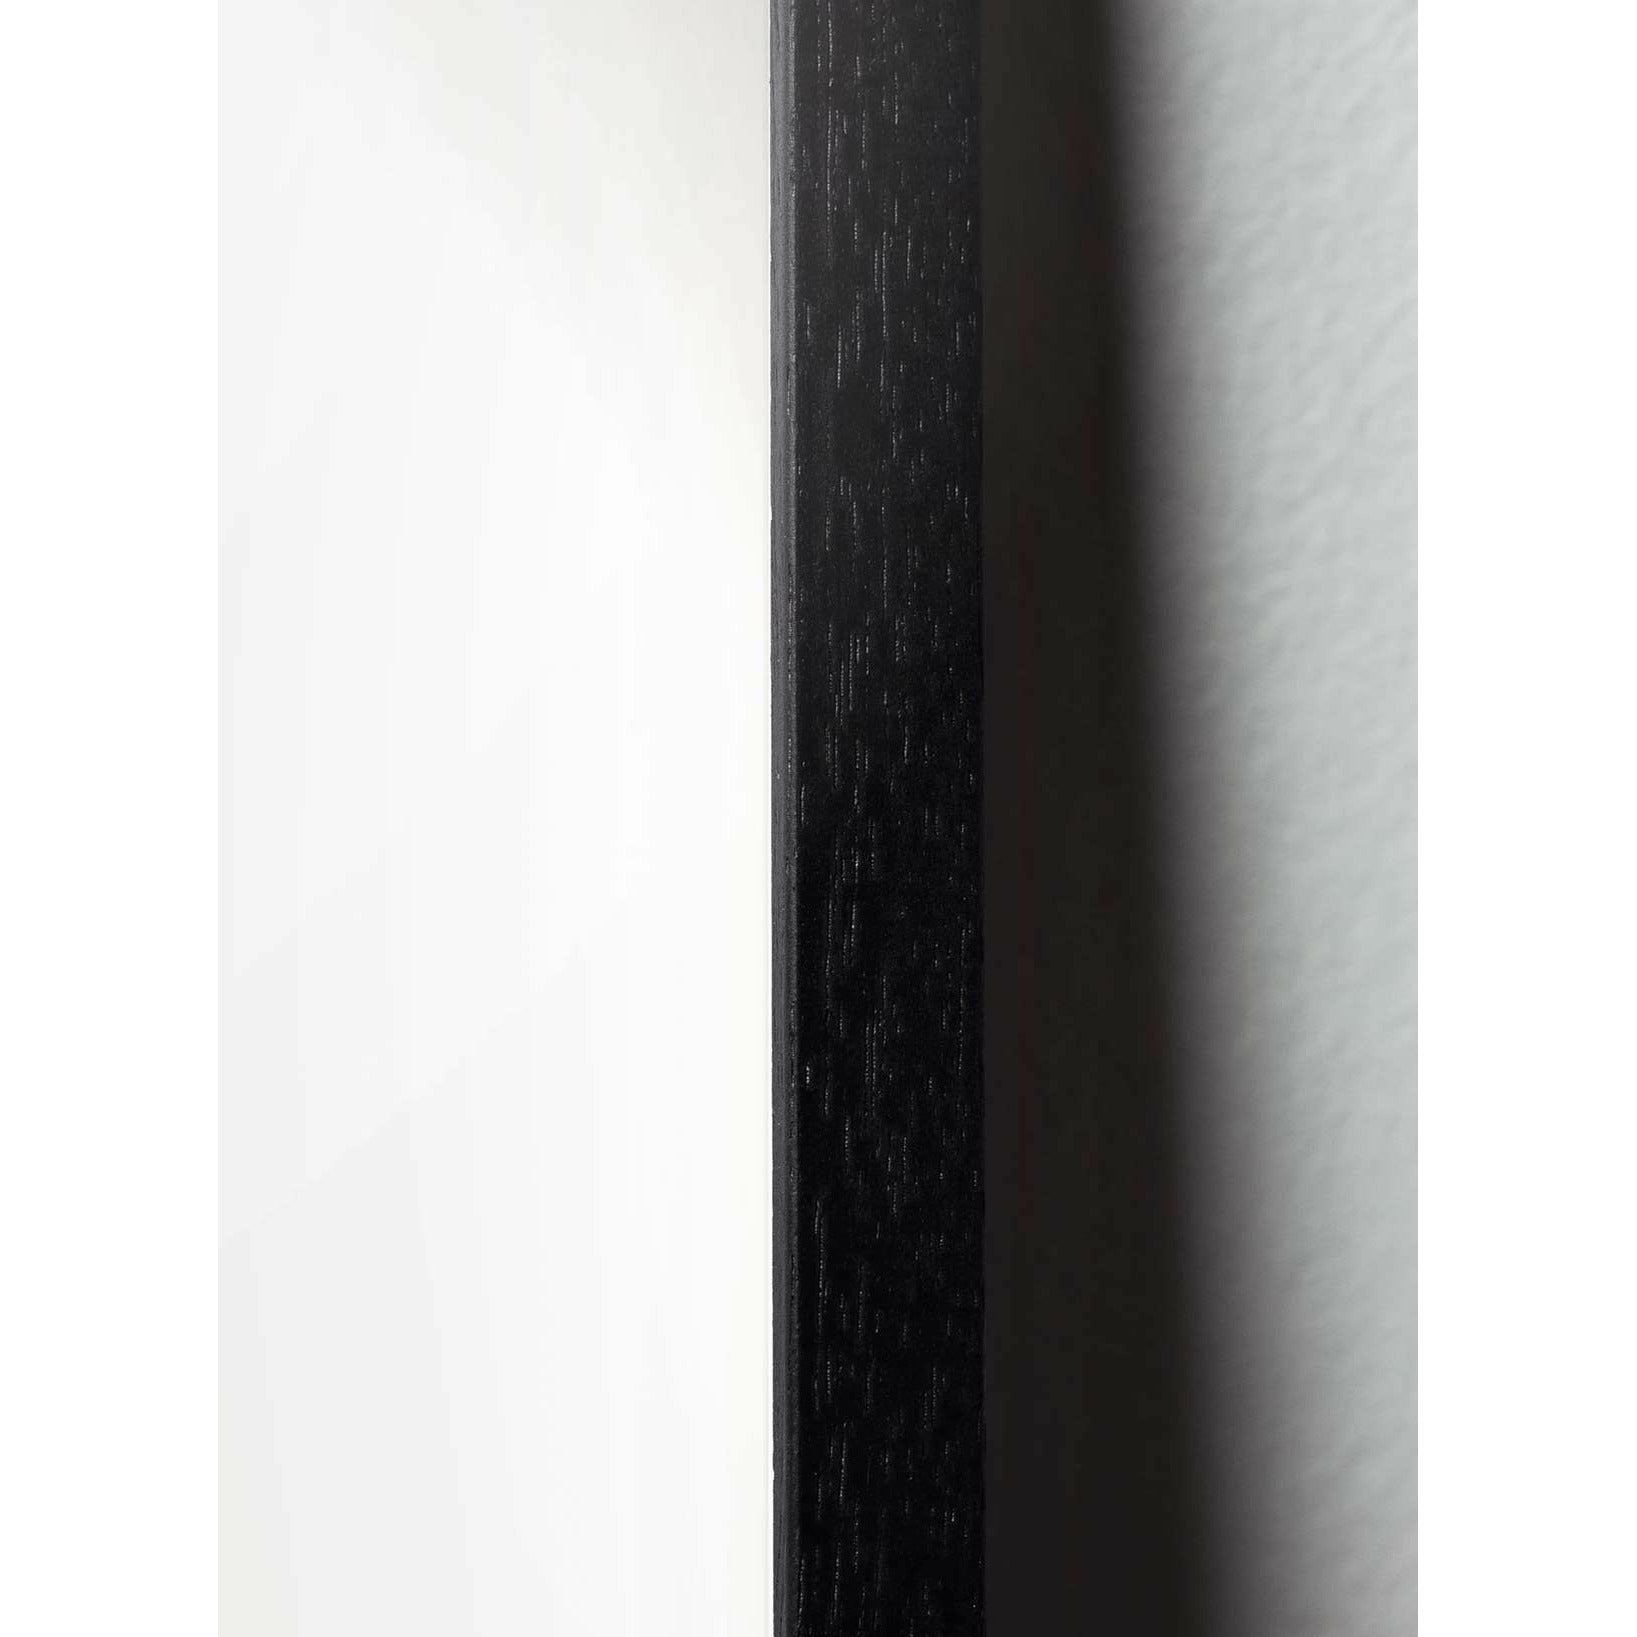 Póster de línea Swan de creación, marco en madera lacada negra 50x70 cm, fondo blanco